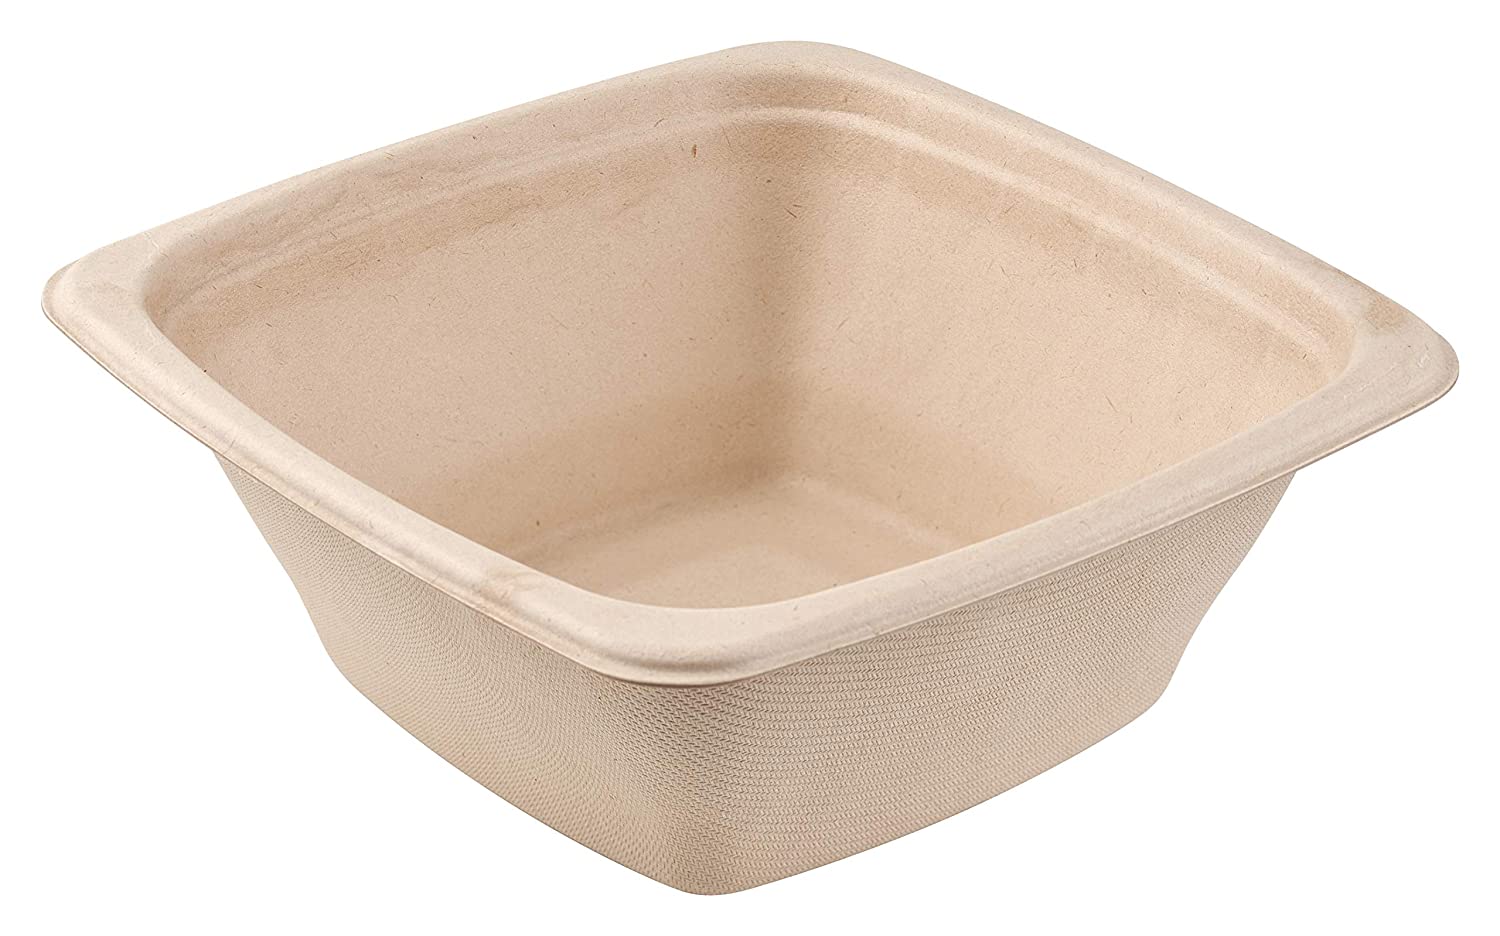 24oz Eco Friendly Disposable Square Bowls Compostable Container